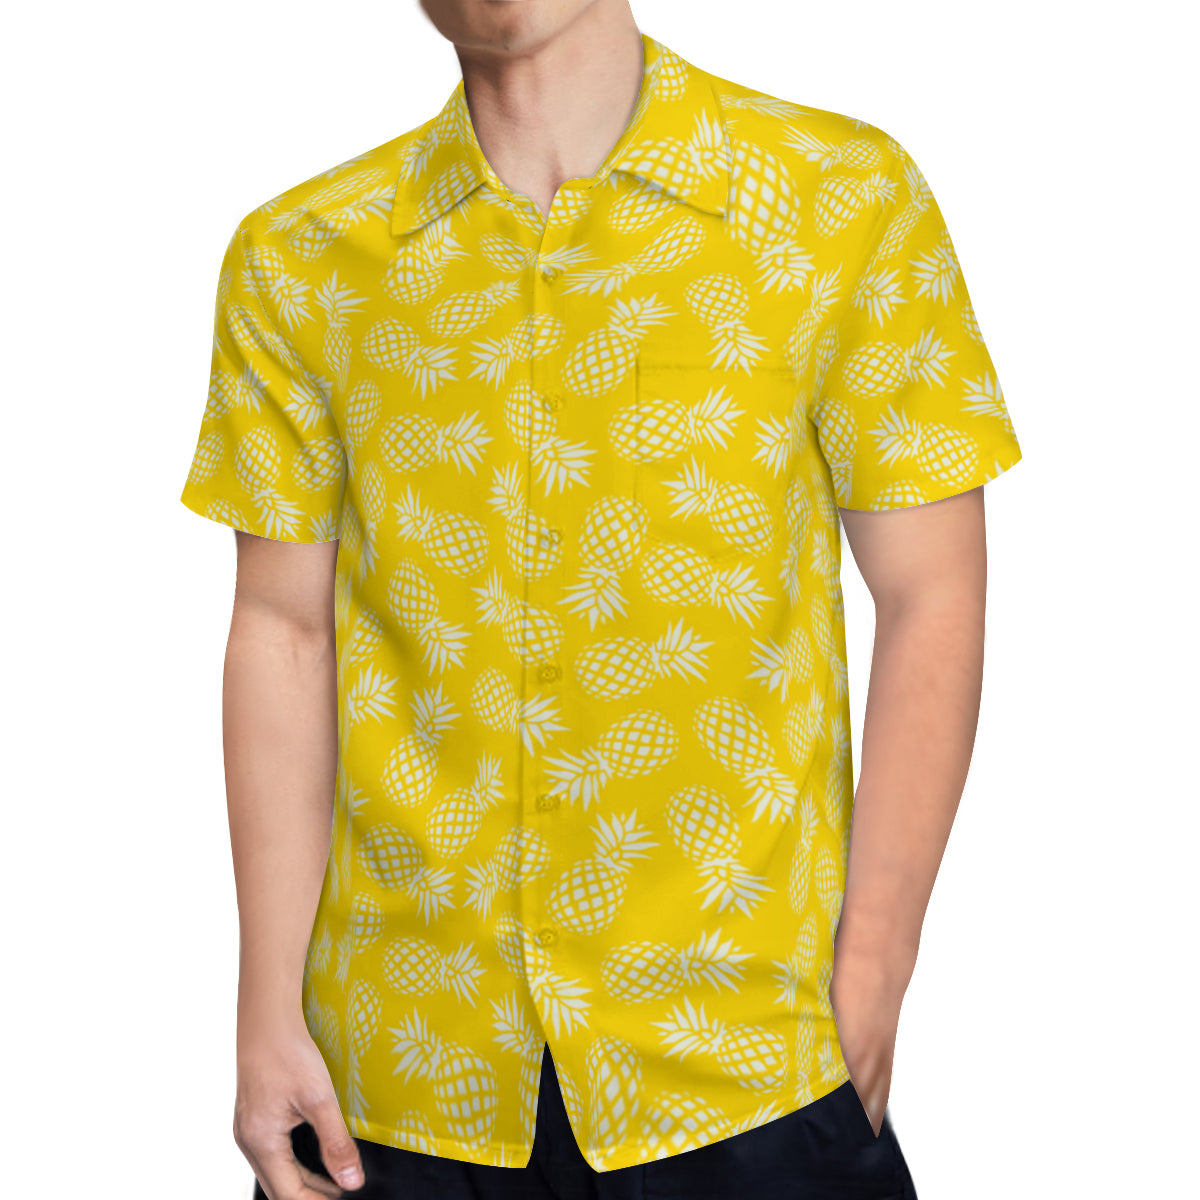 Pineapple Shirt Men, Hawaiian Shirt Men, Tropical Shirt Men, Neon Yellow Shirt Men, Pineapple Top men, Spring Summer Top Men, Neon Shirt Men